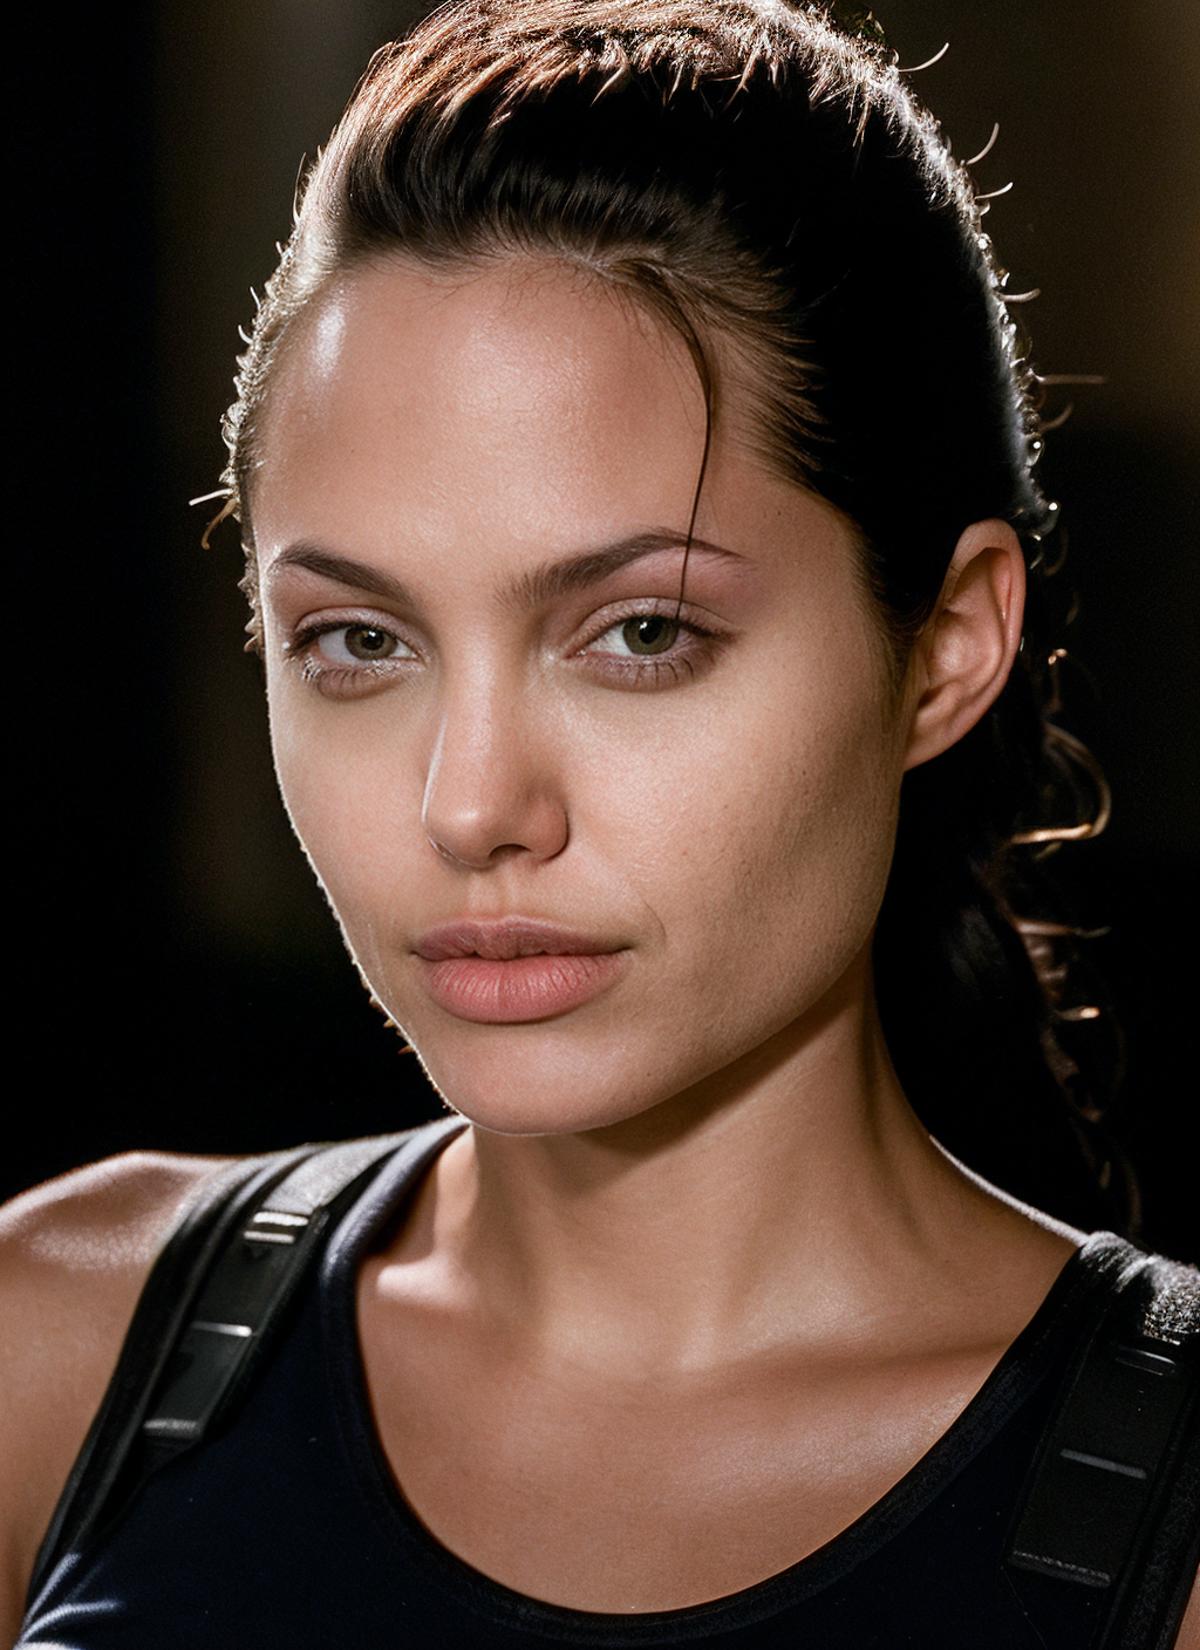 Tomb Raider's Lara Croft (Angelina Jolie) image by astragartist